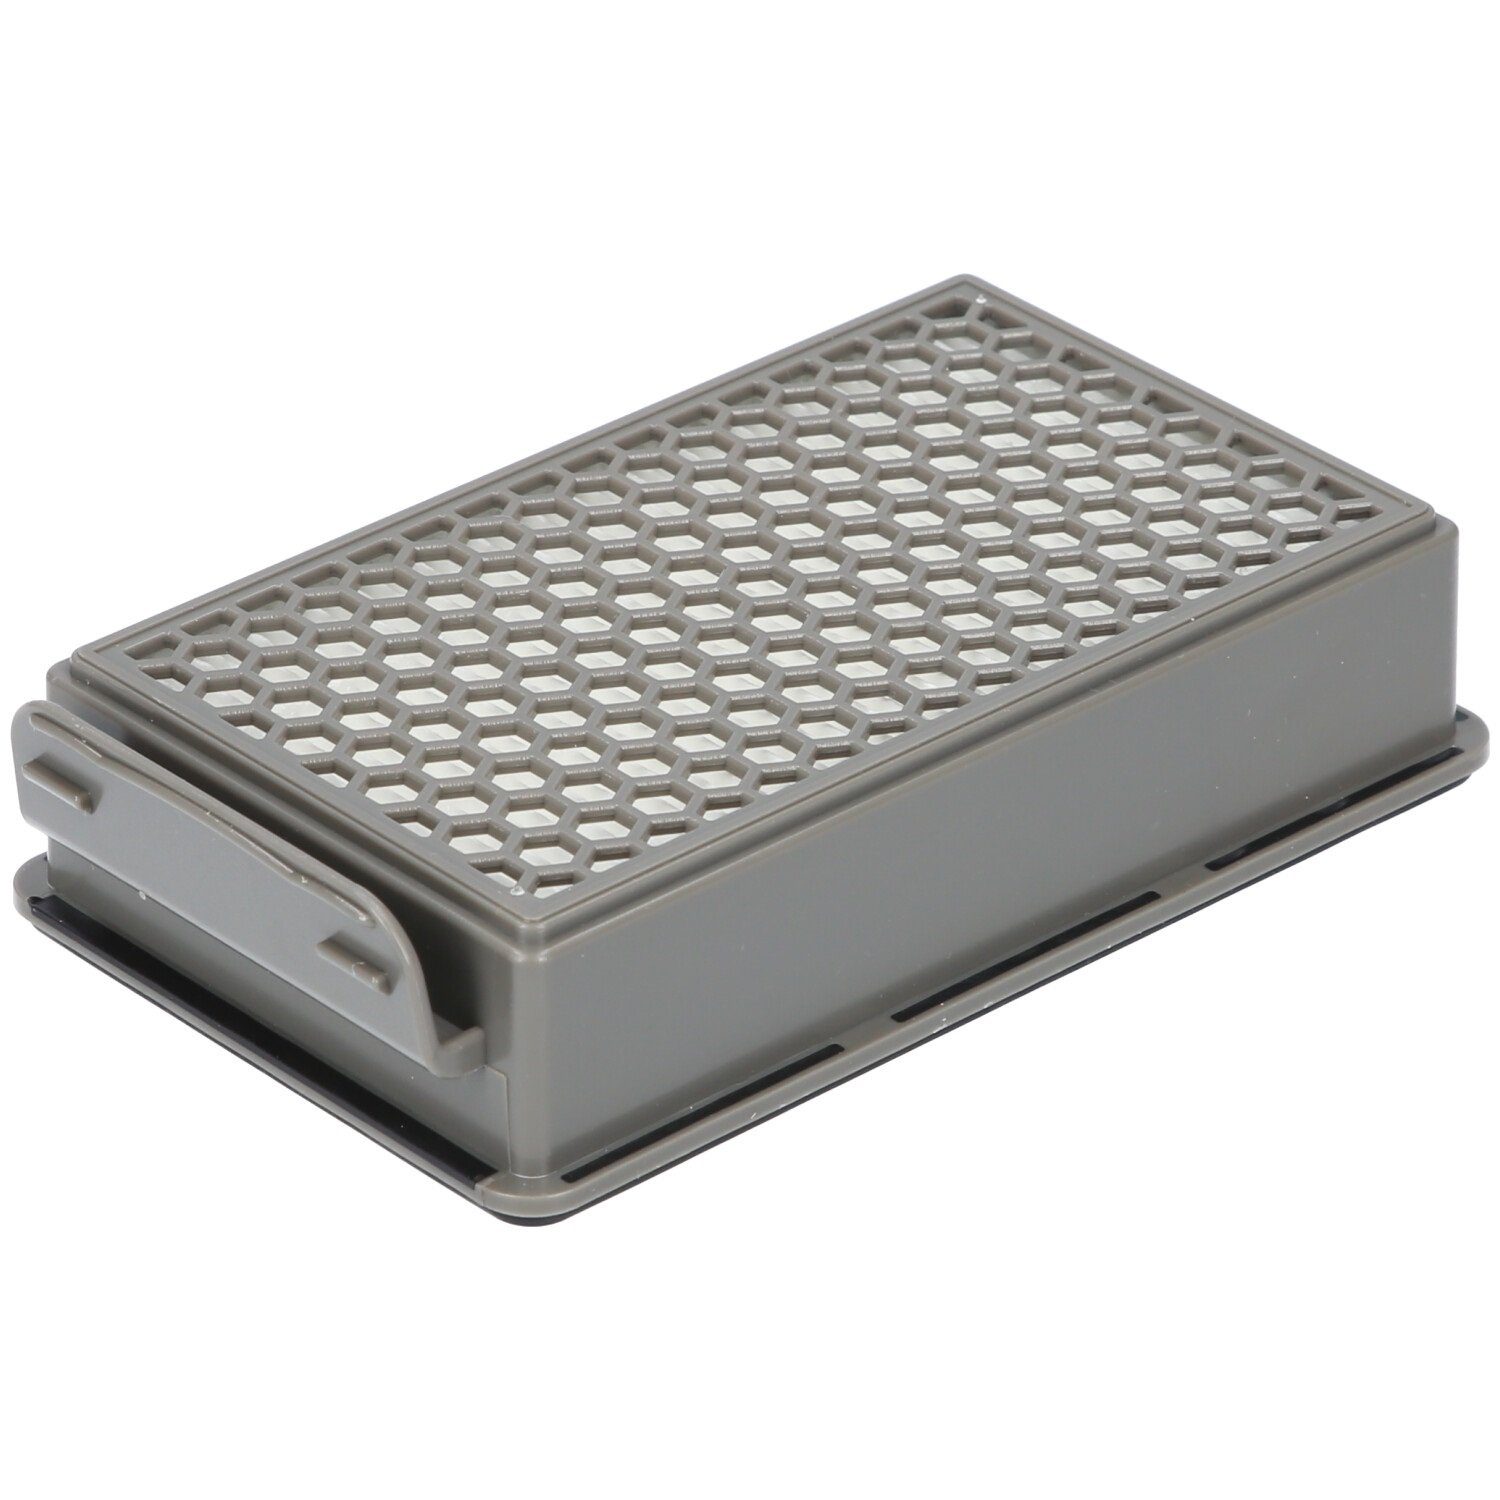 McFilter Filter-Set geeignet für Moulinex für ZR005901 Alternativ MO3953PA / MO3969PA, 2x / MO3951PA MO3985PA, MO3967PA Rundfilter, Filterkassette, / 2x